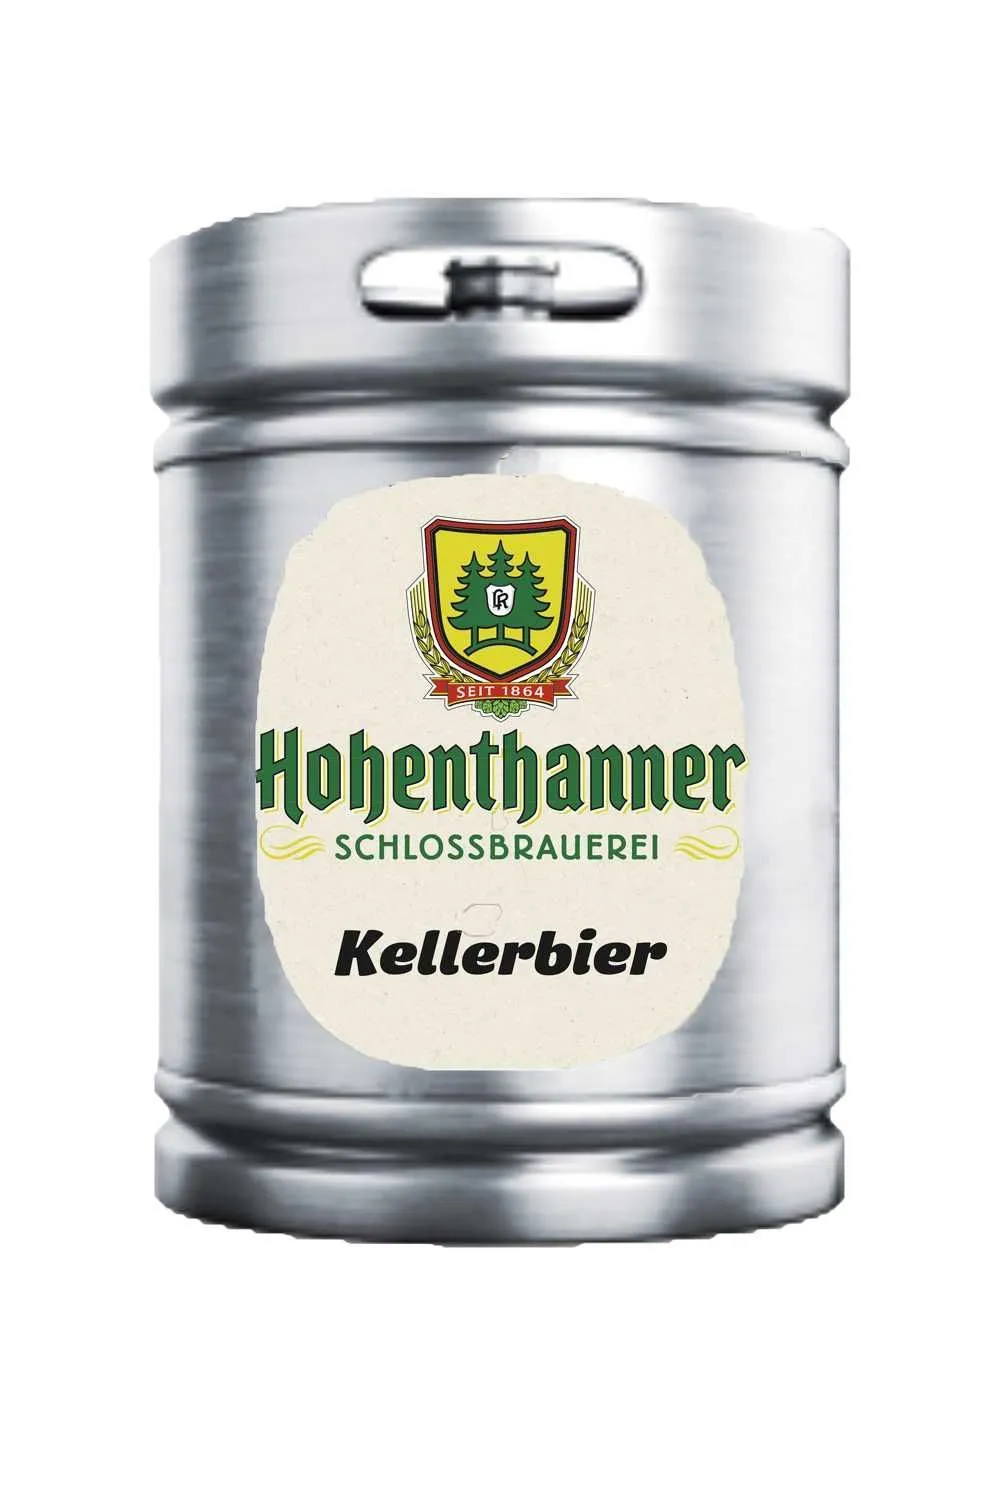 Пиво Хоэнтаннер Келлербир 5,0% (Германия)